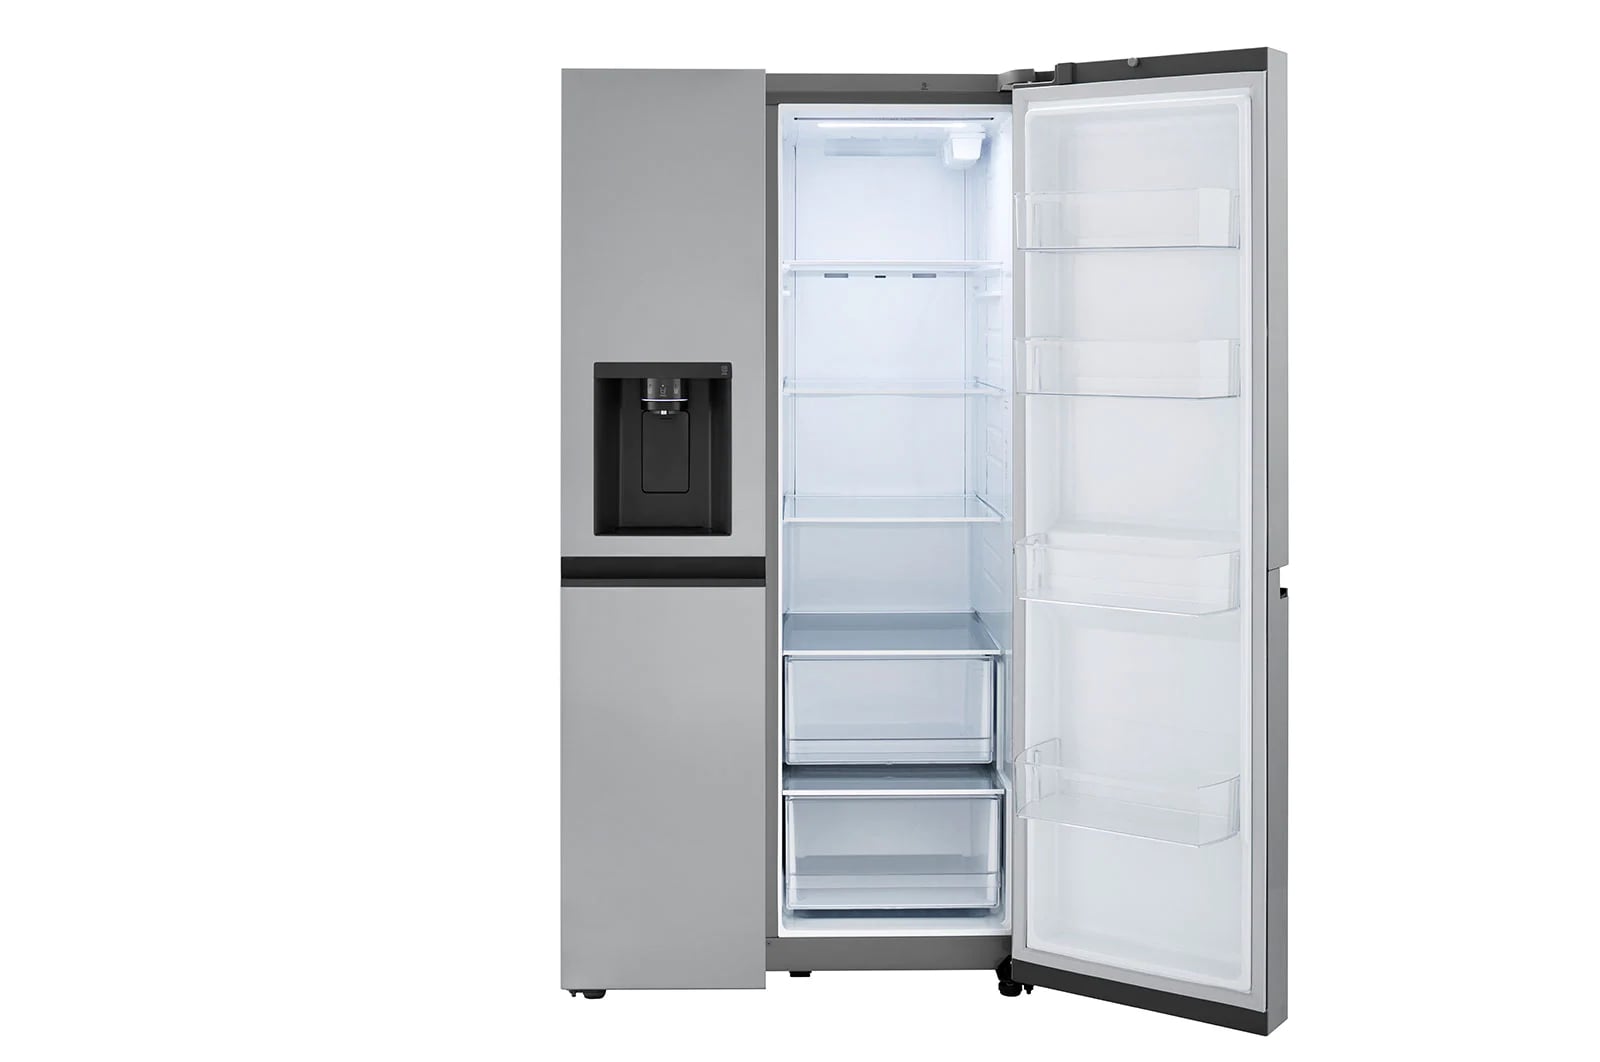 LG - 35.875 Inch 27.1 cu. ft Side by Side Refrigerator in Silver - LRSXS2706V